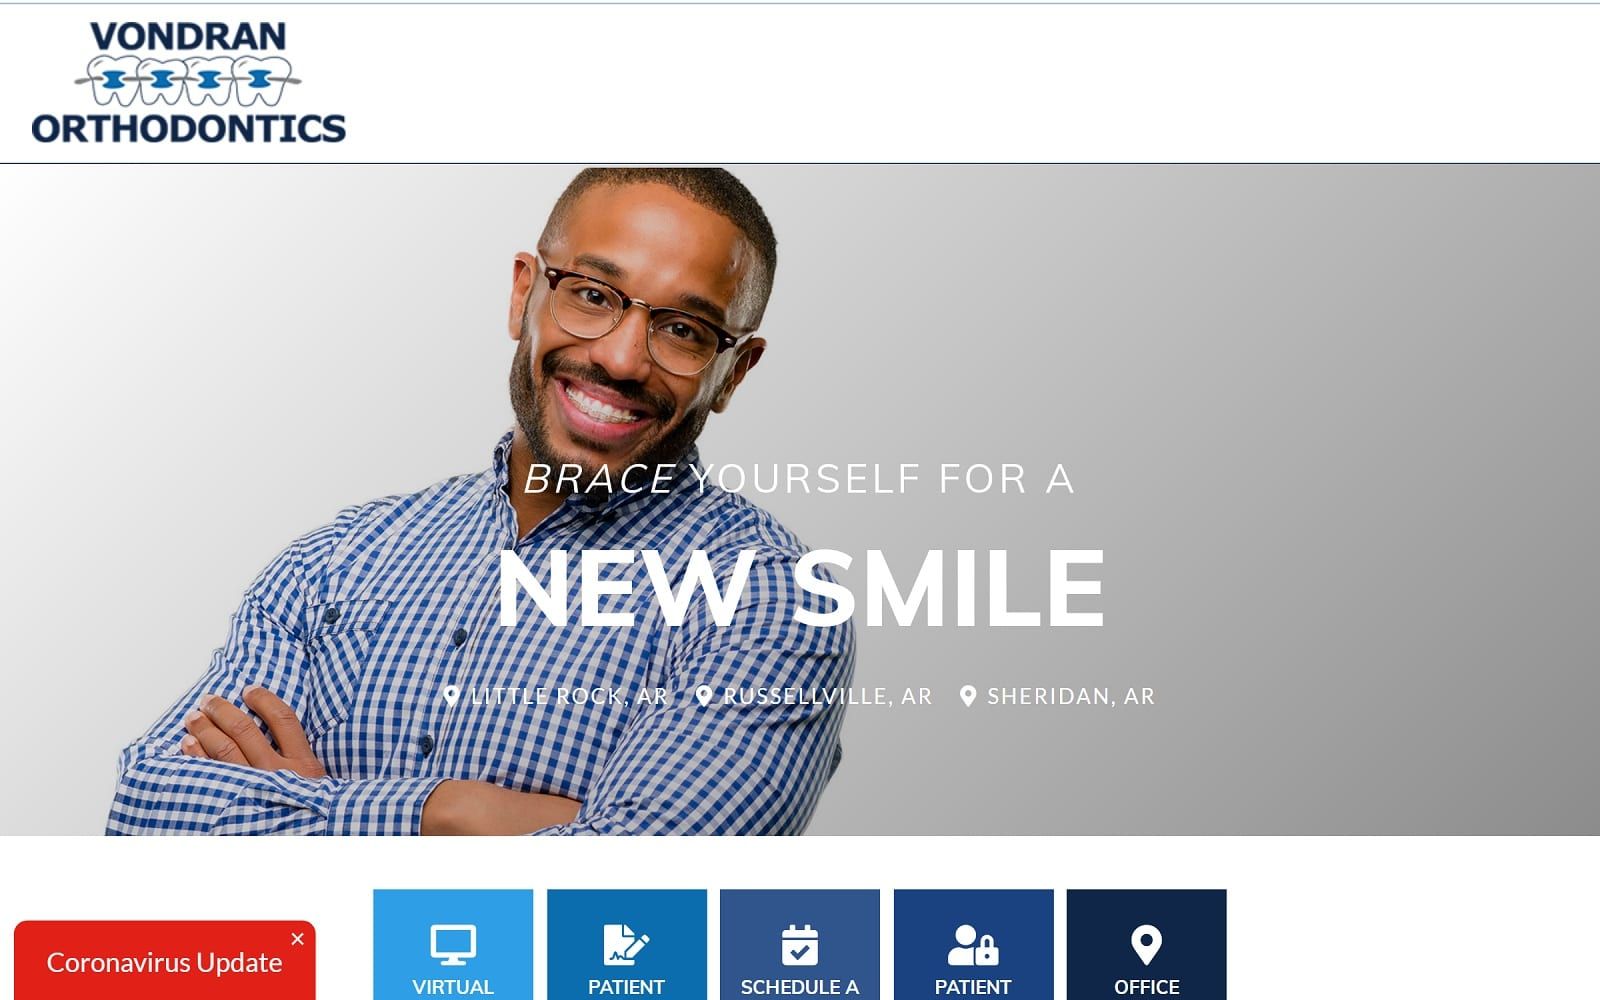 The Screenshot of Vondran Orthodontics arkansasbraces.com Dr. Charles Vondran, Jr. Website